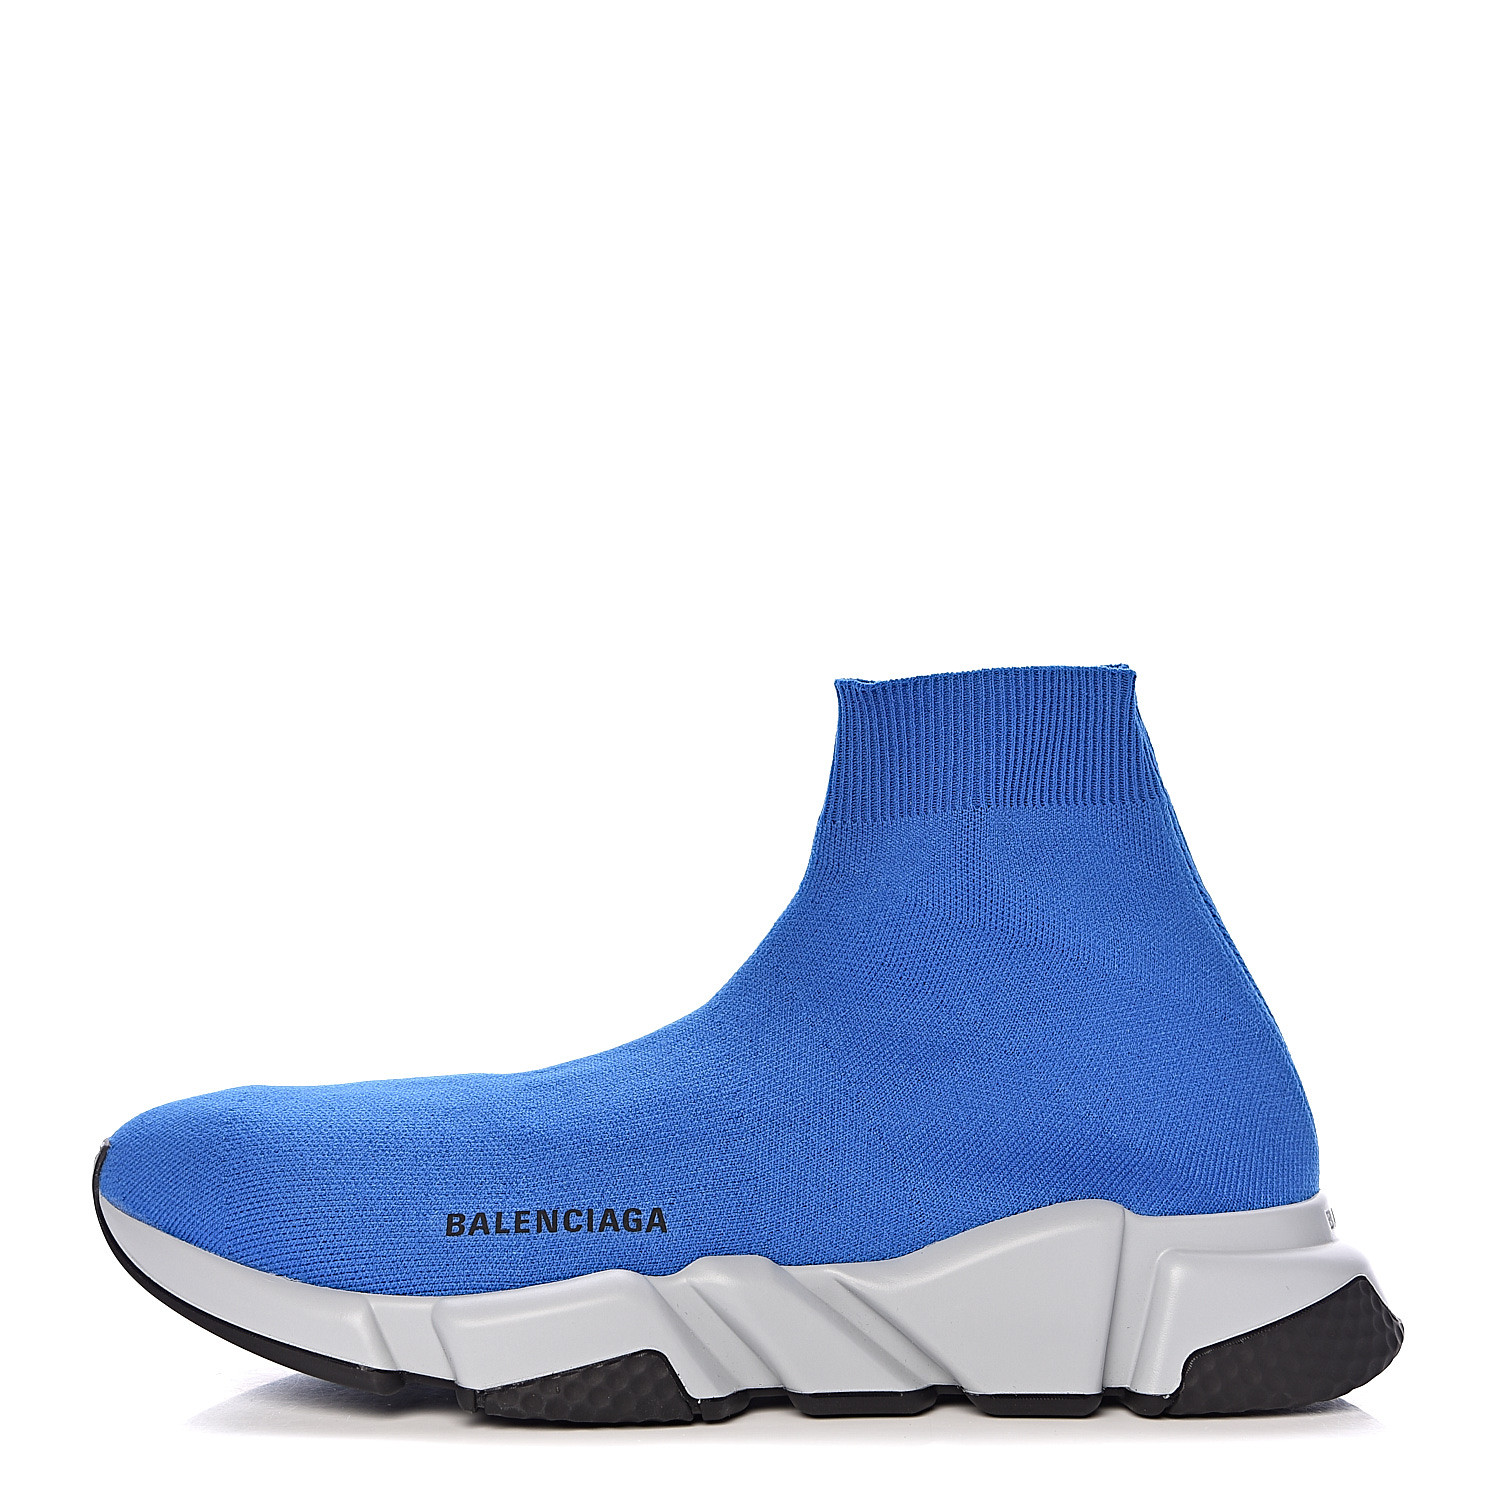 BALENCIAGA Neoprene Knit Mens Speed Trainer Sneakers 10 Blue 483440